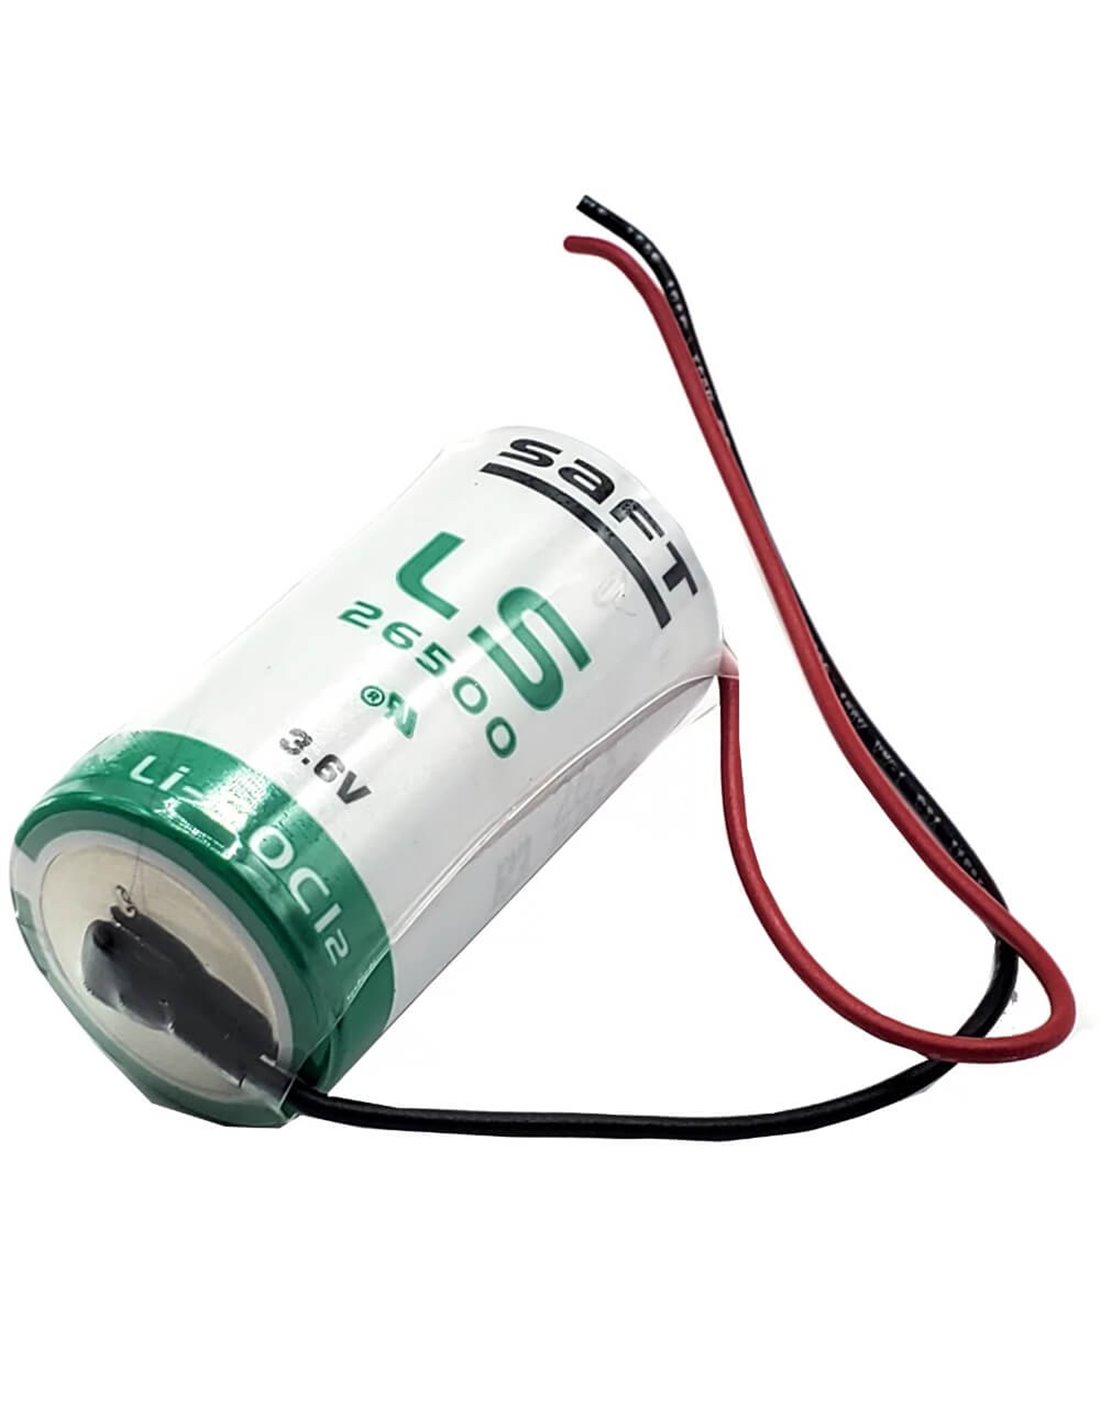 Bateria (Li-Ion) de 1850 mAh para Roomba e